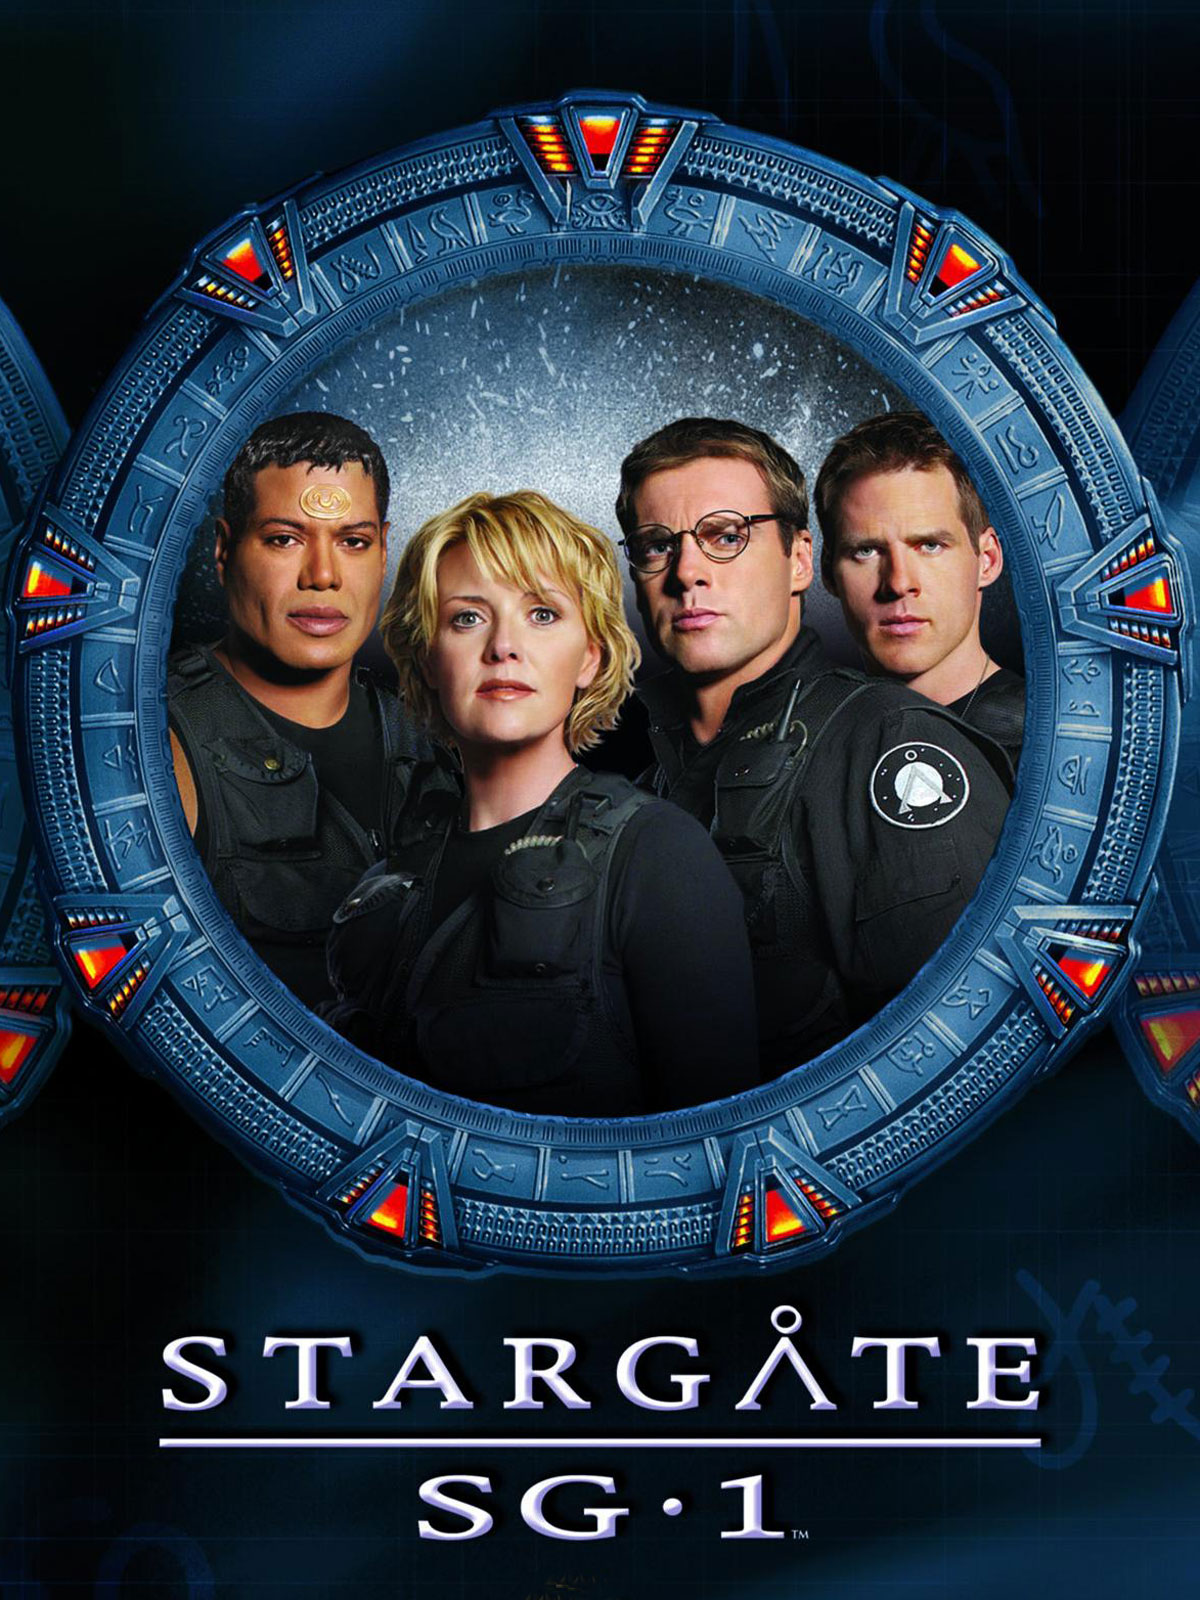 Stargate sg-1 Season 8 Autogramm Auto Card a73 Isaac Hayes als tolok